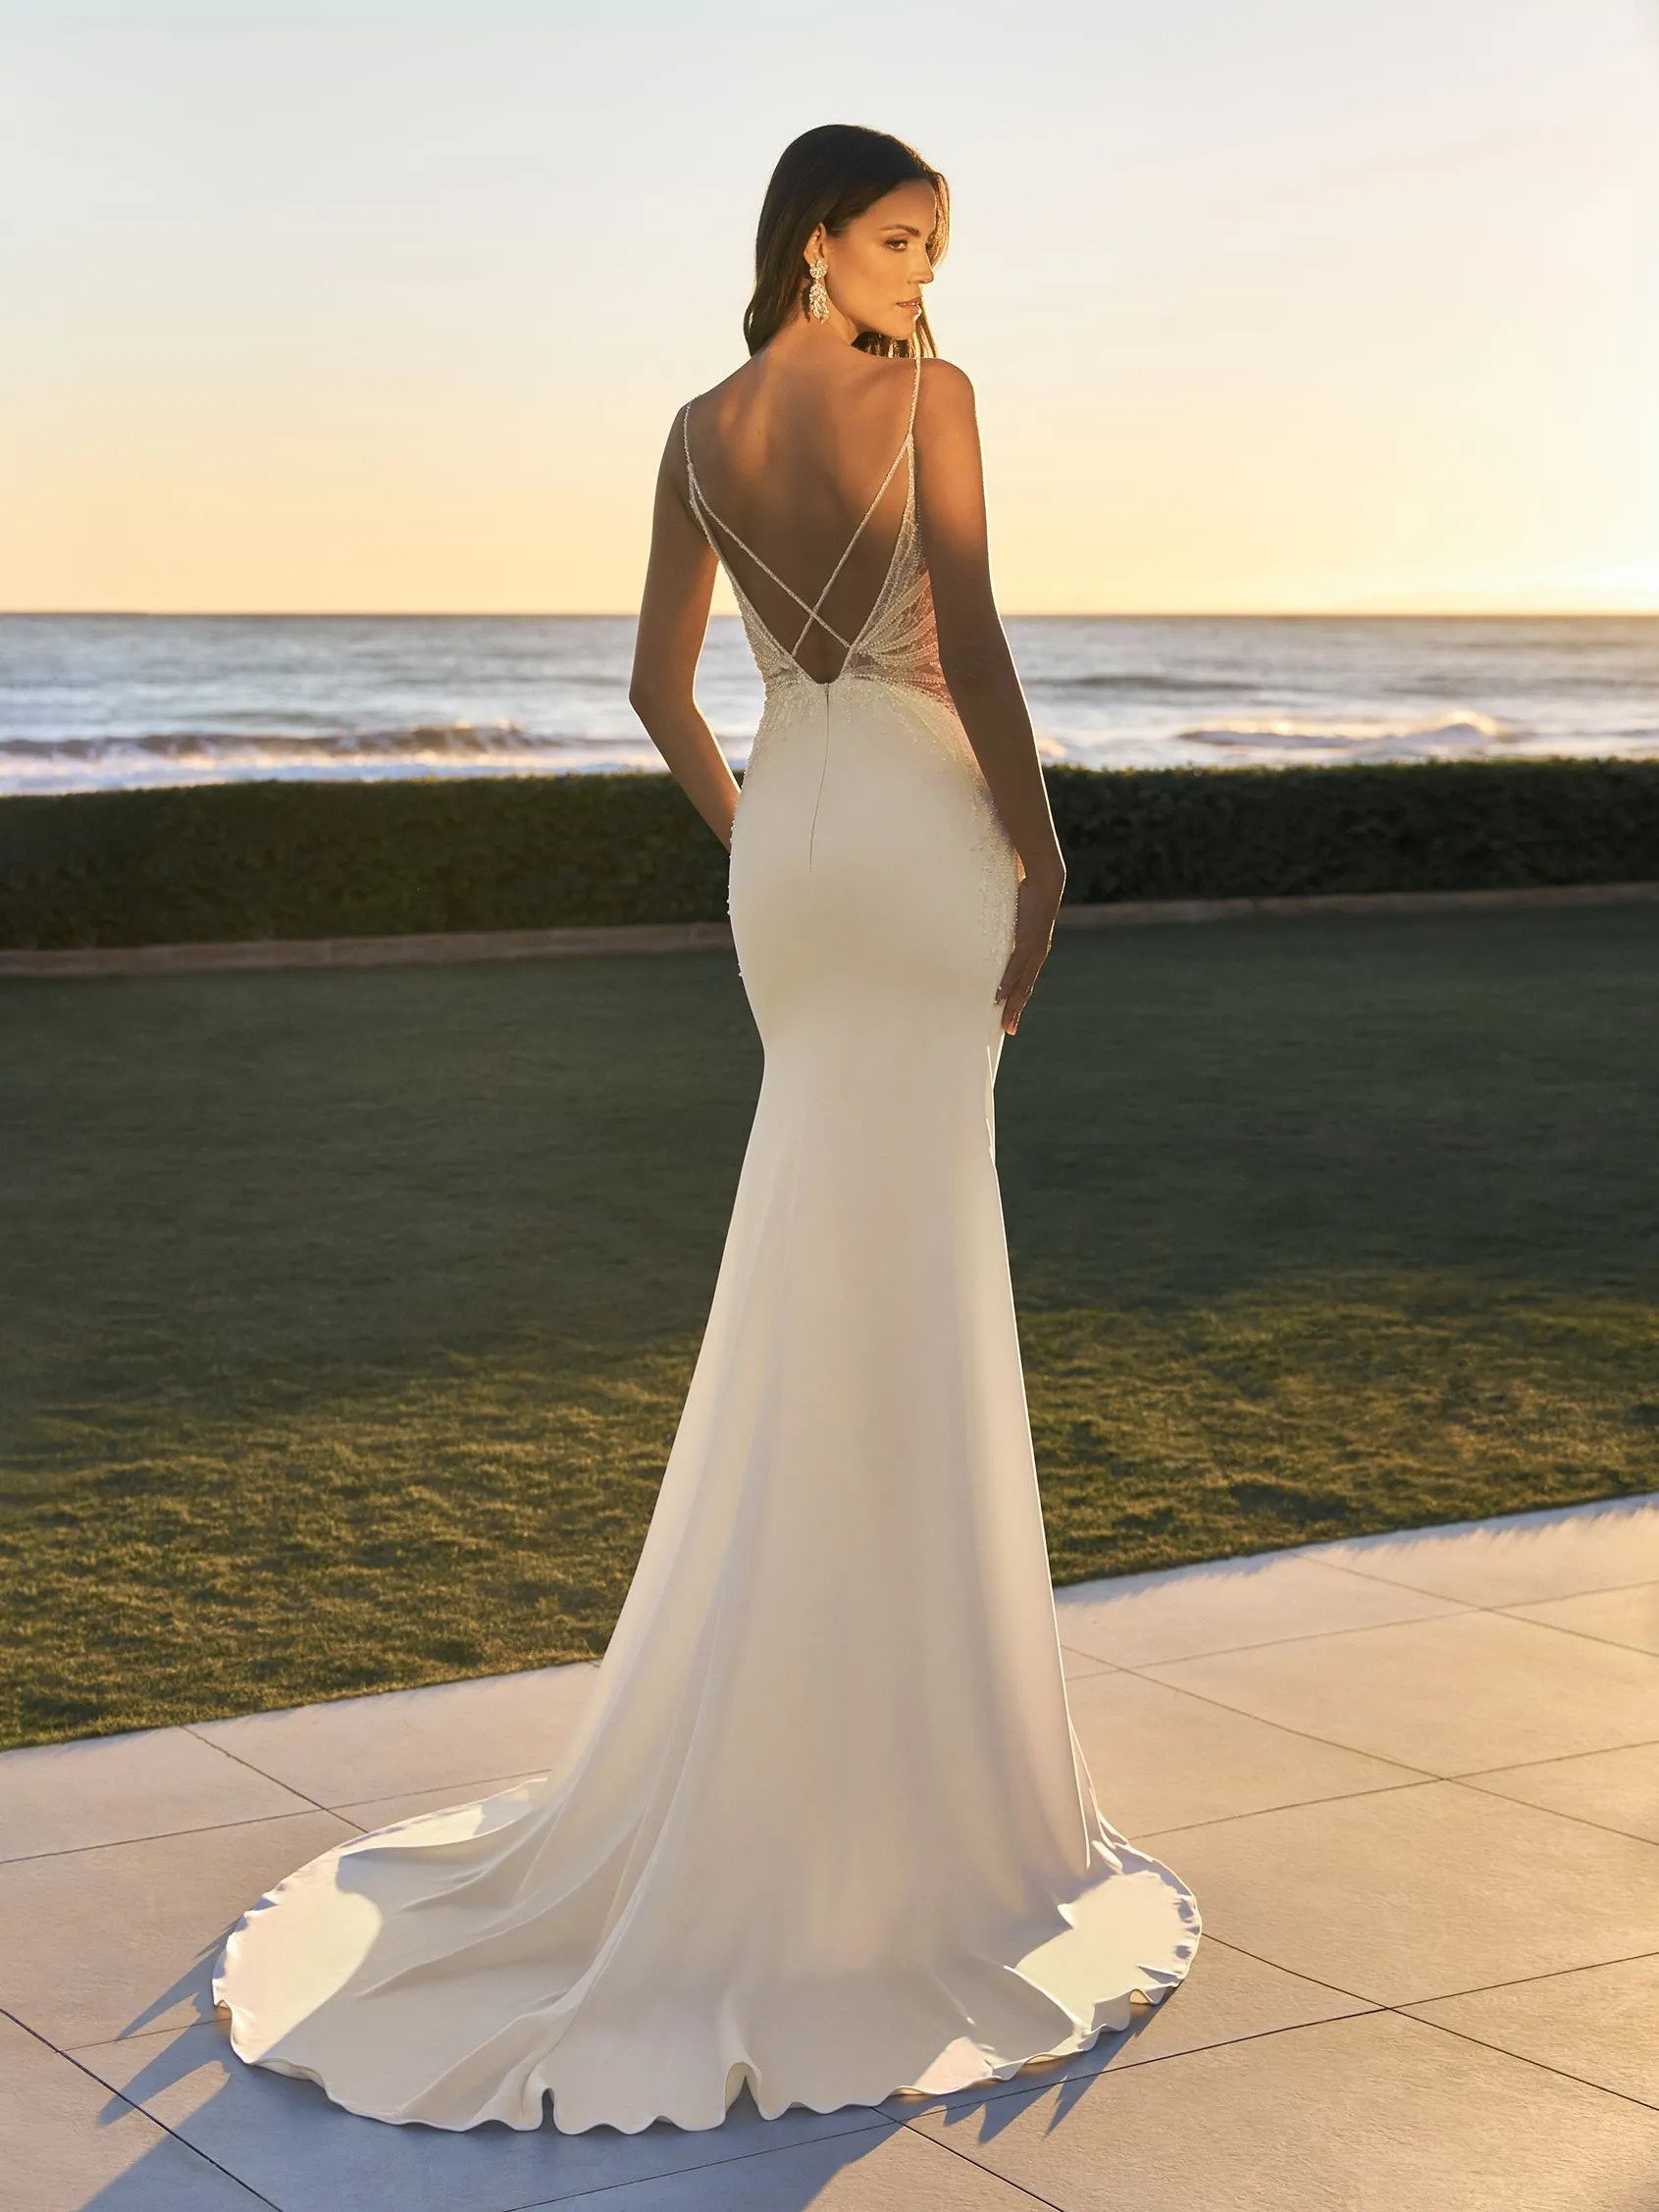 blanc-de-blanc-bridal-boutique-pittsburgh-dress-wedding-gown-iris.jpg